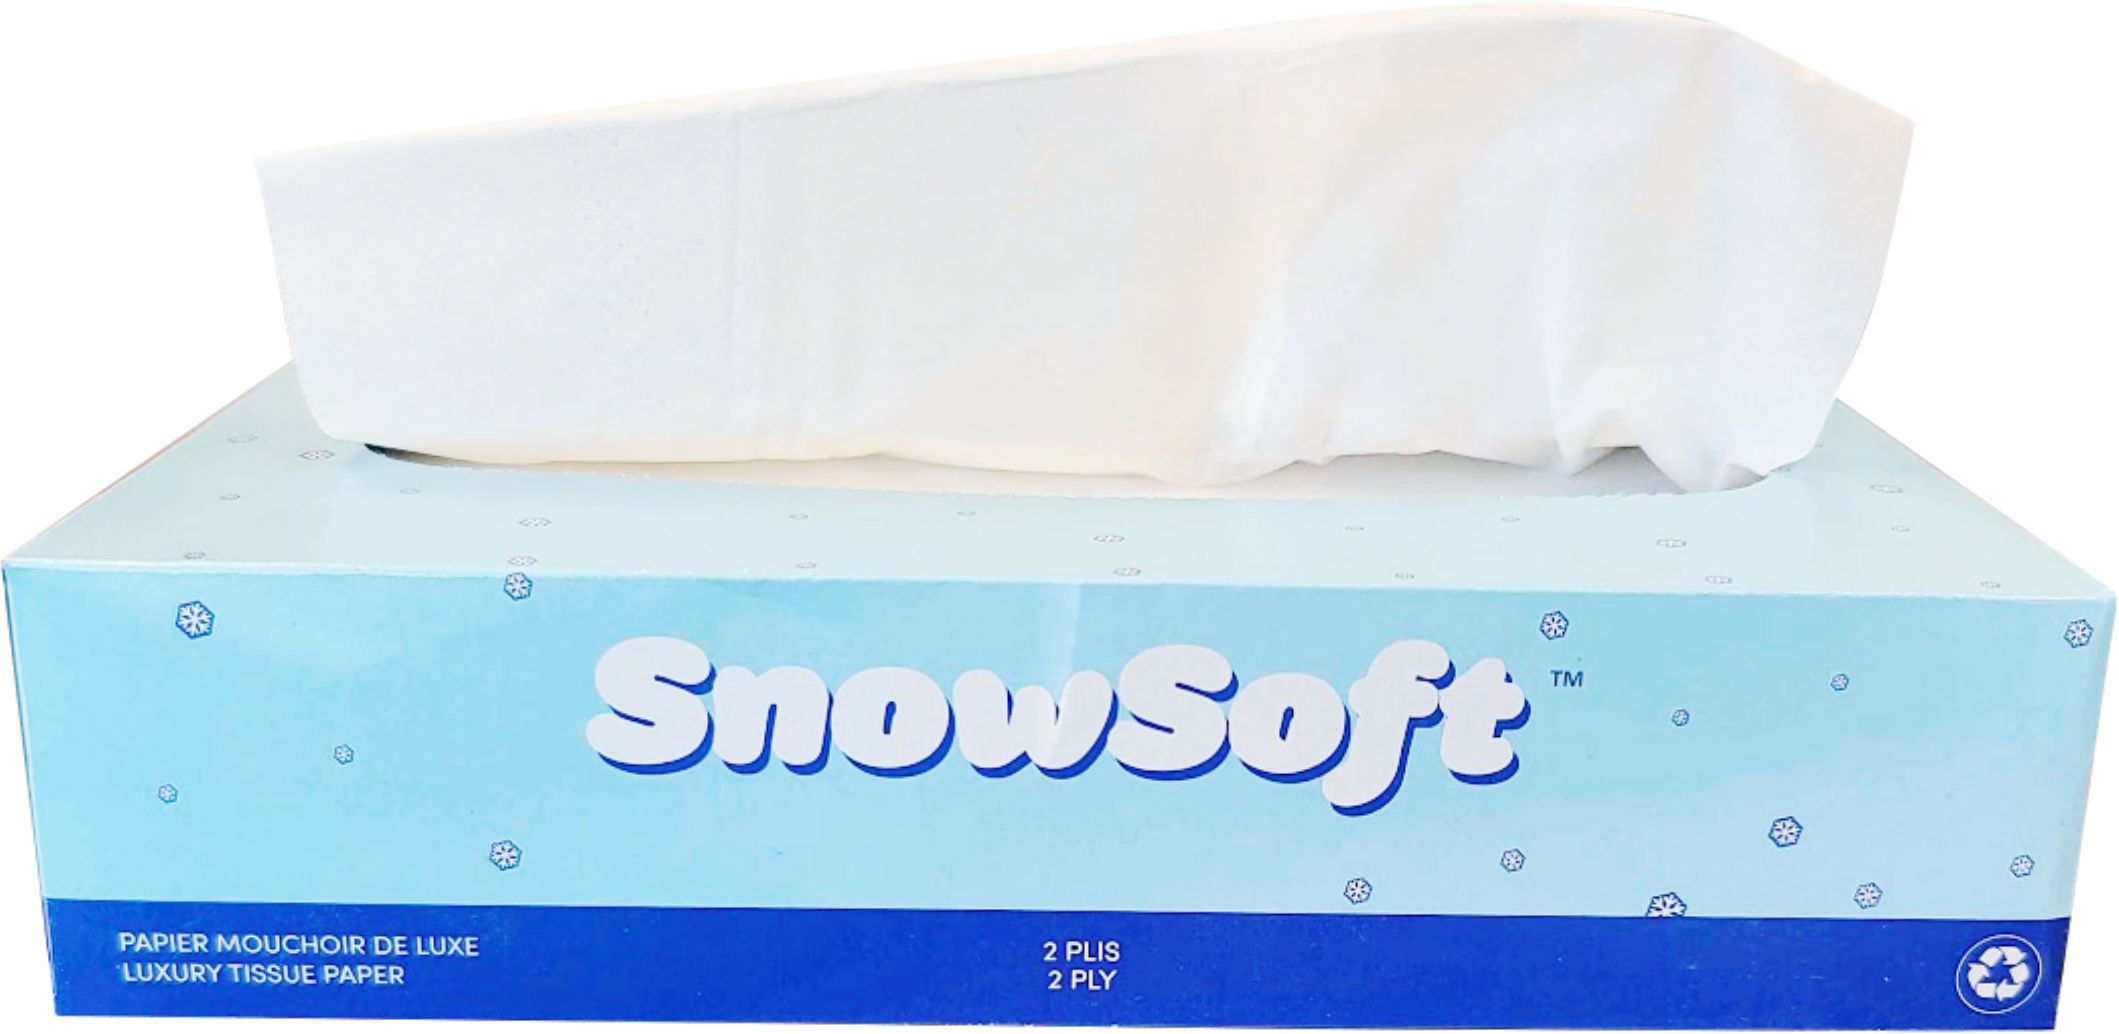 Snow Soft - 100 Sheet 2 Ply Facial Tissue, 30 Bx/Cs - FT10030